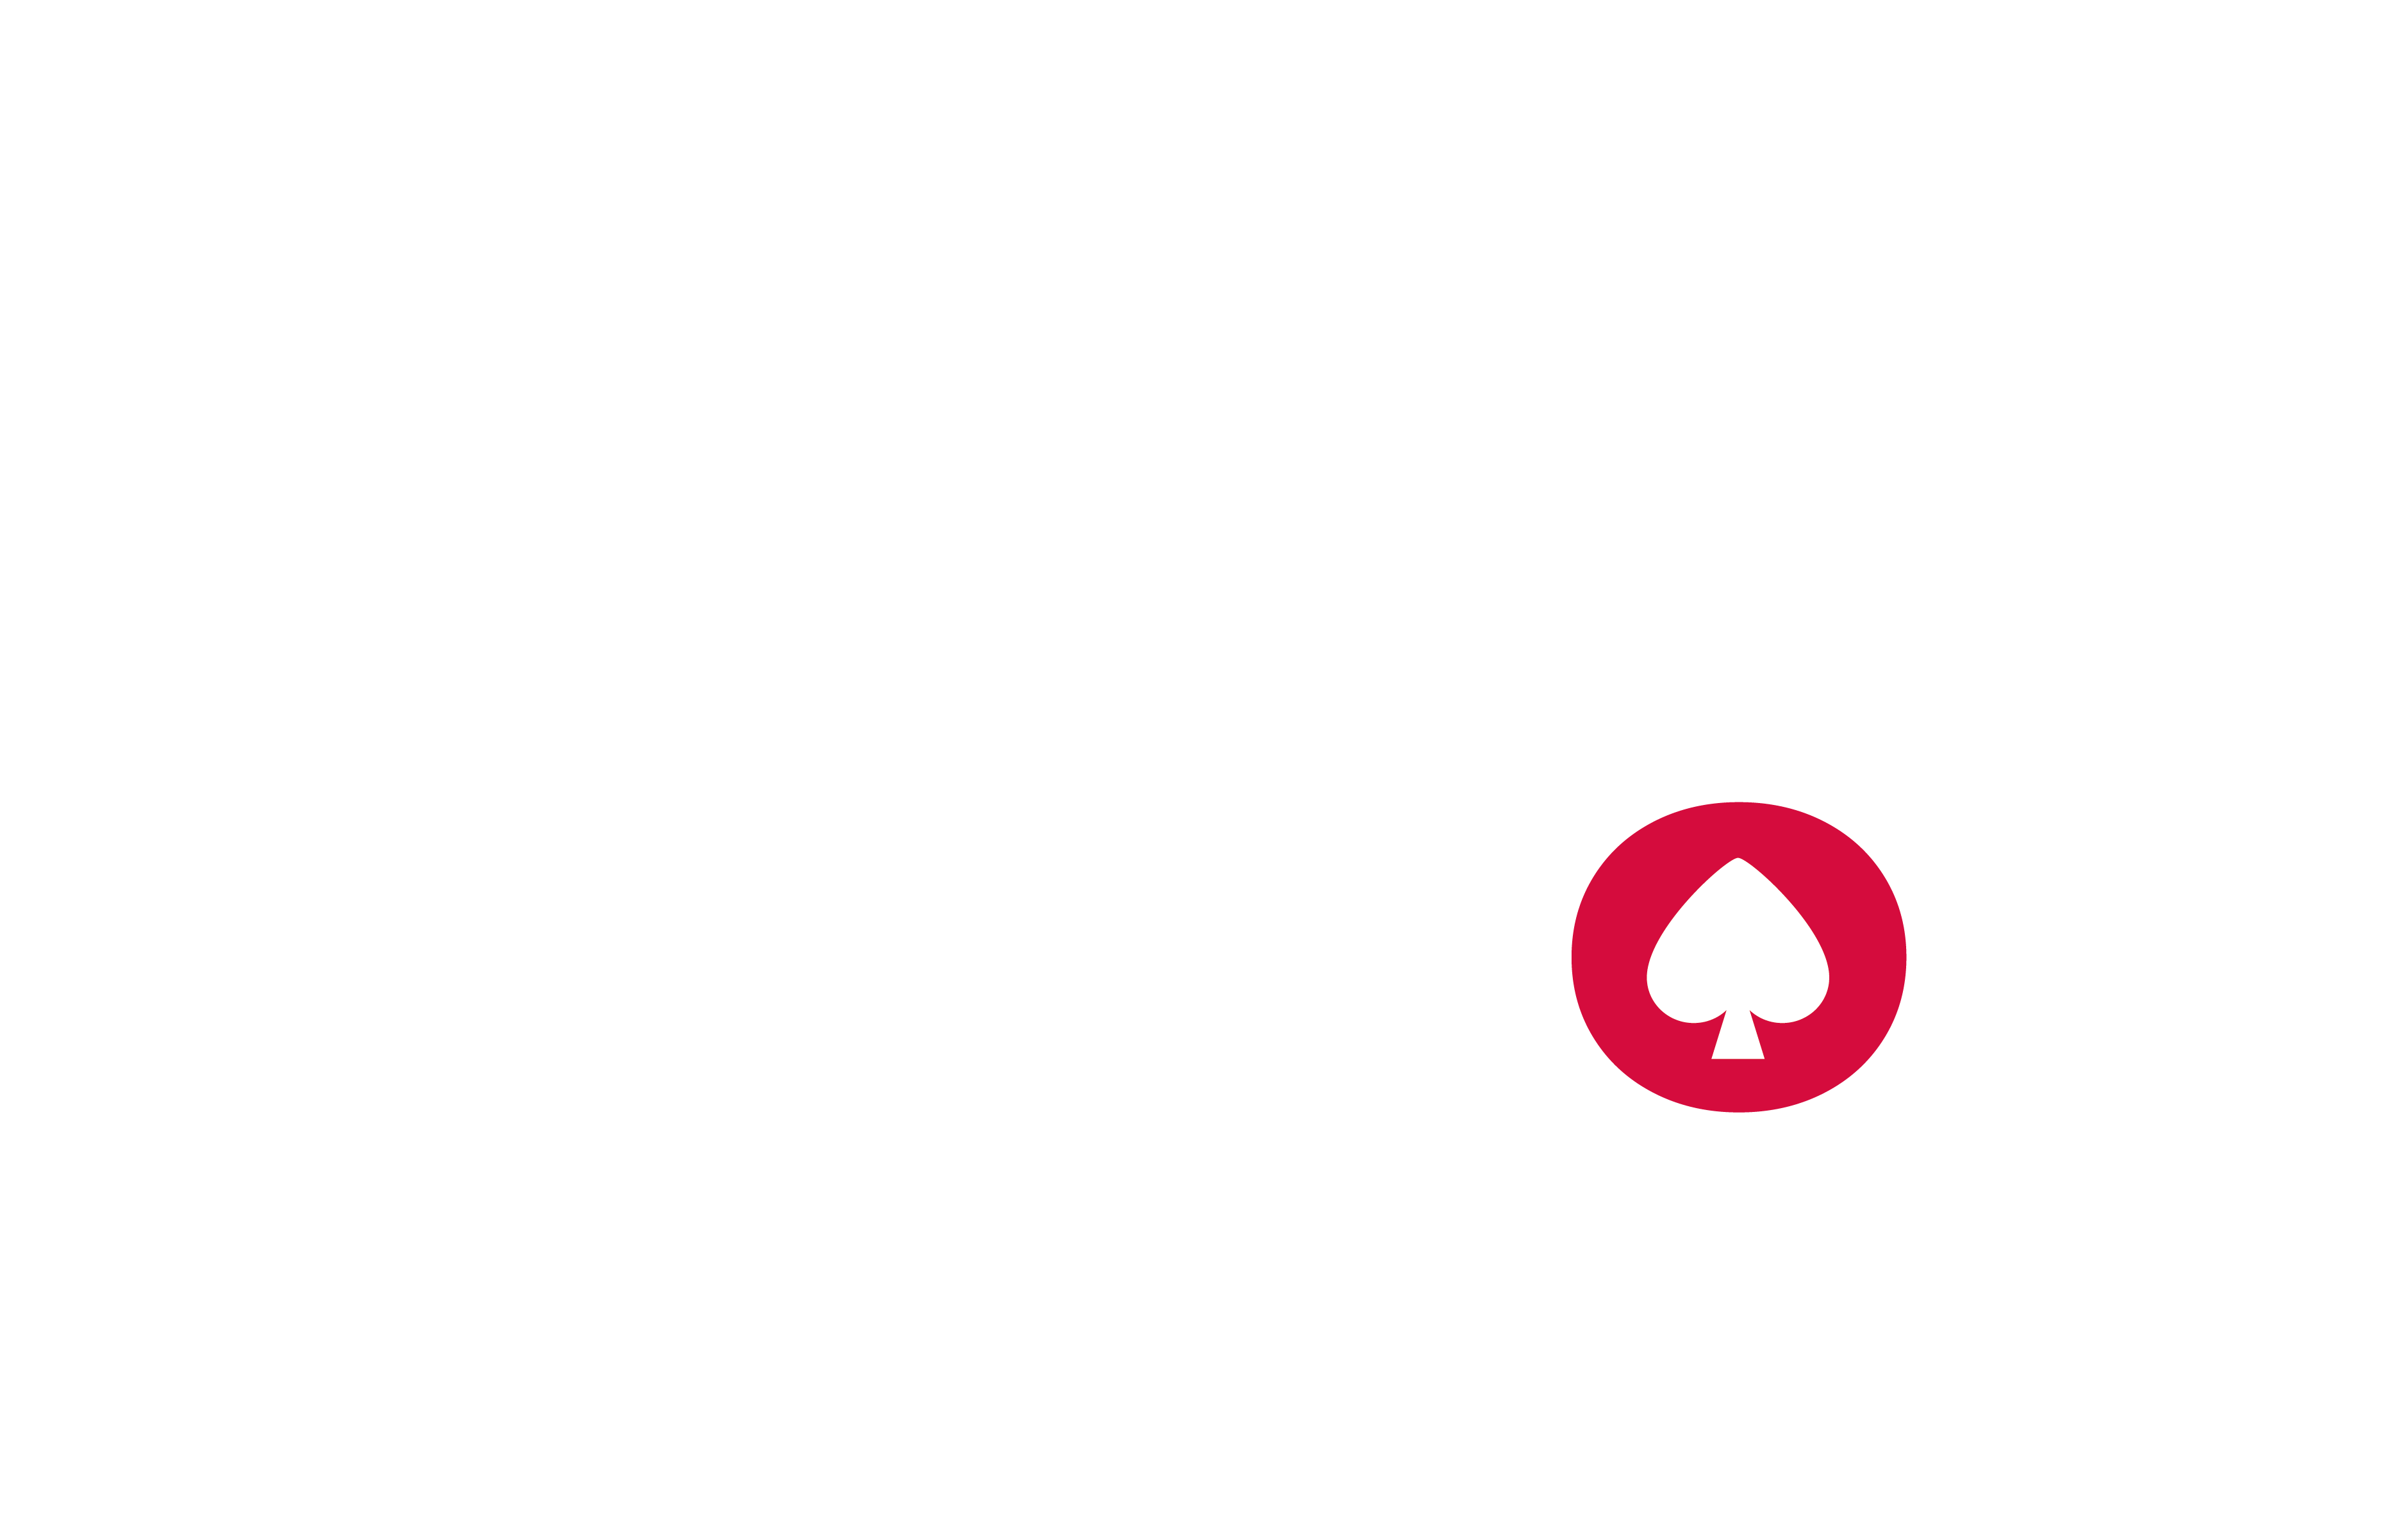 The Secret of bitcoin casinos